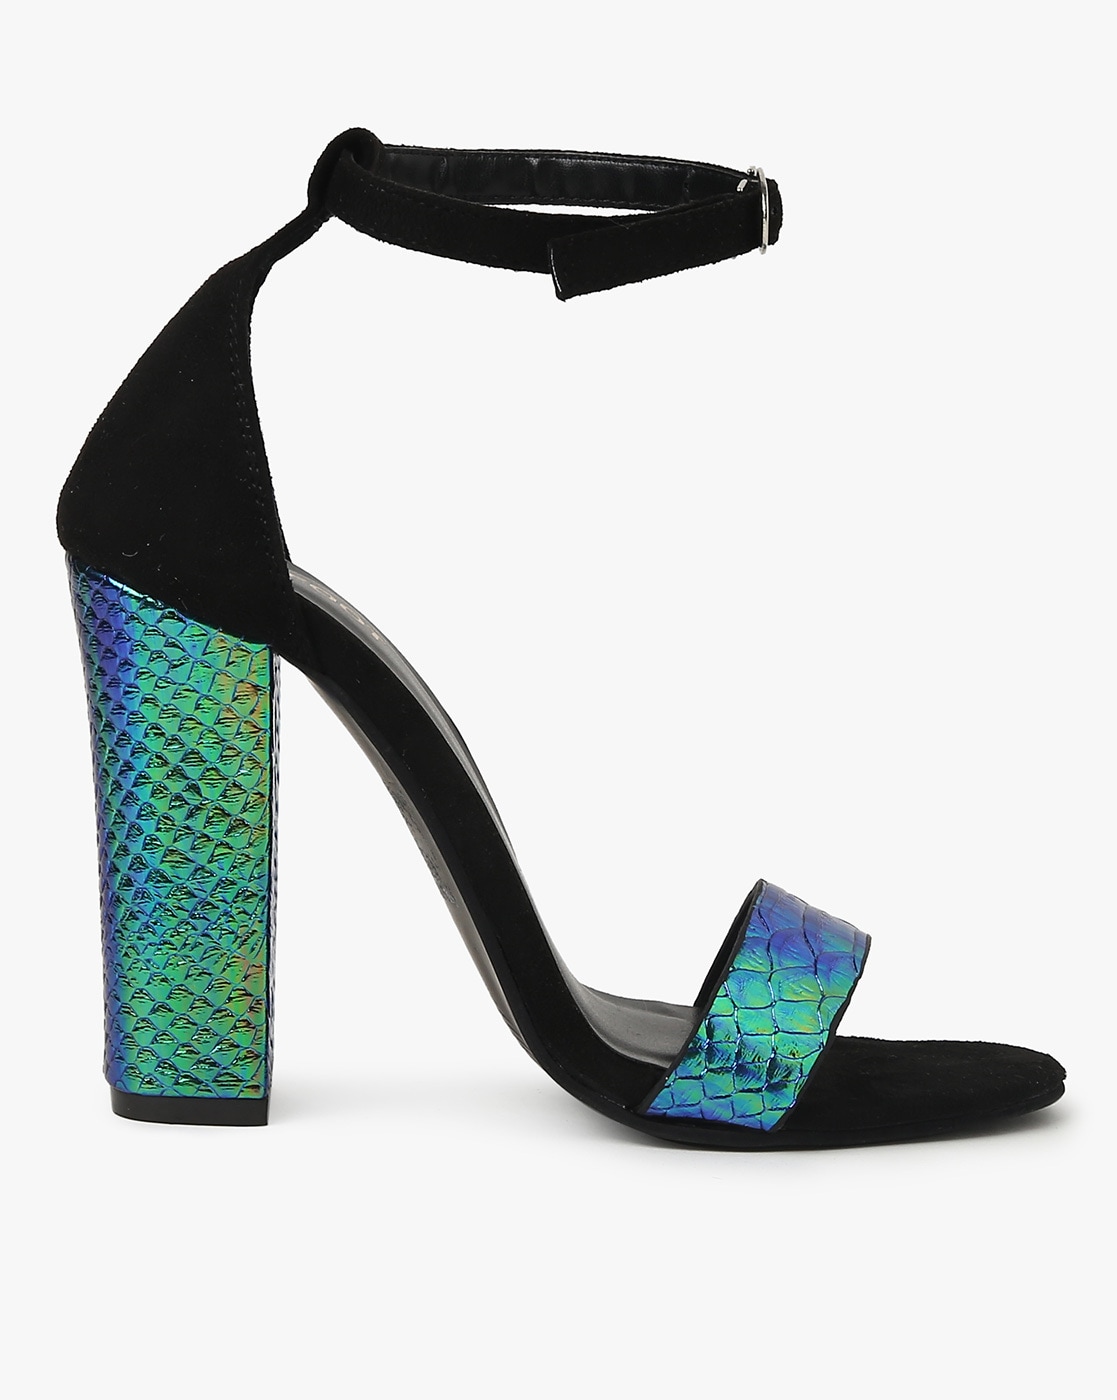 Hologram High Heels Sandals Party Shoes Plus Size 35-41 | Heels, High heel  sandals, Party shoes